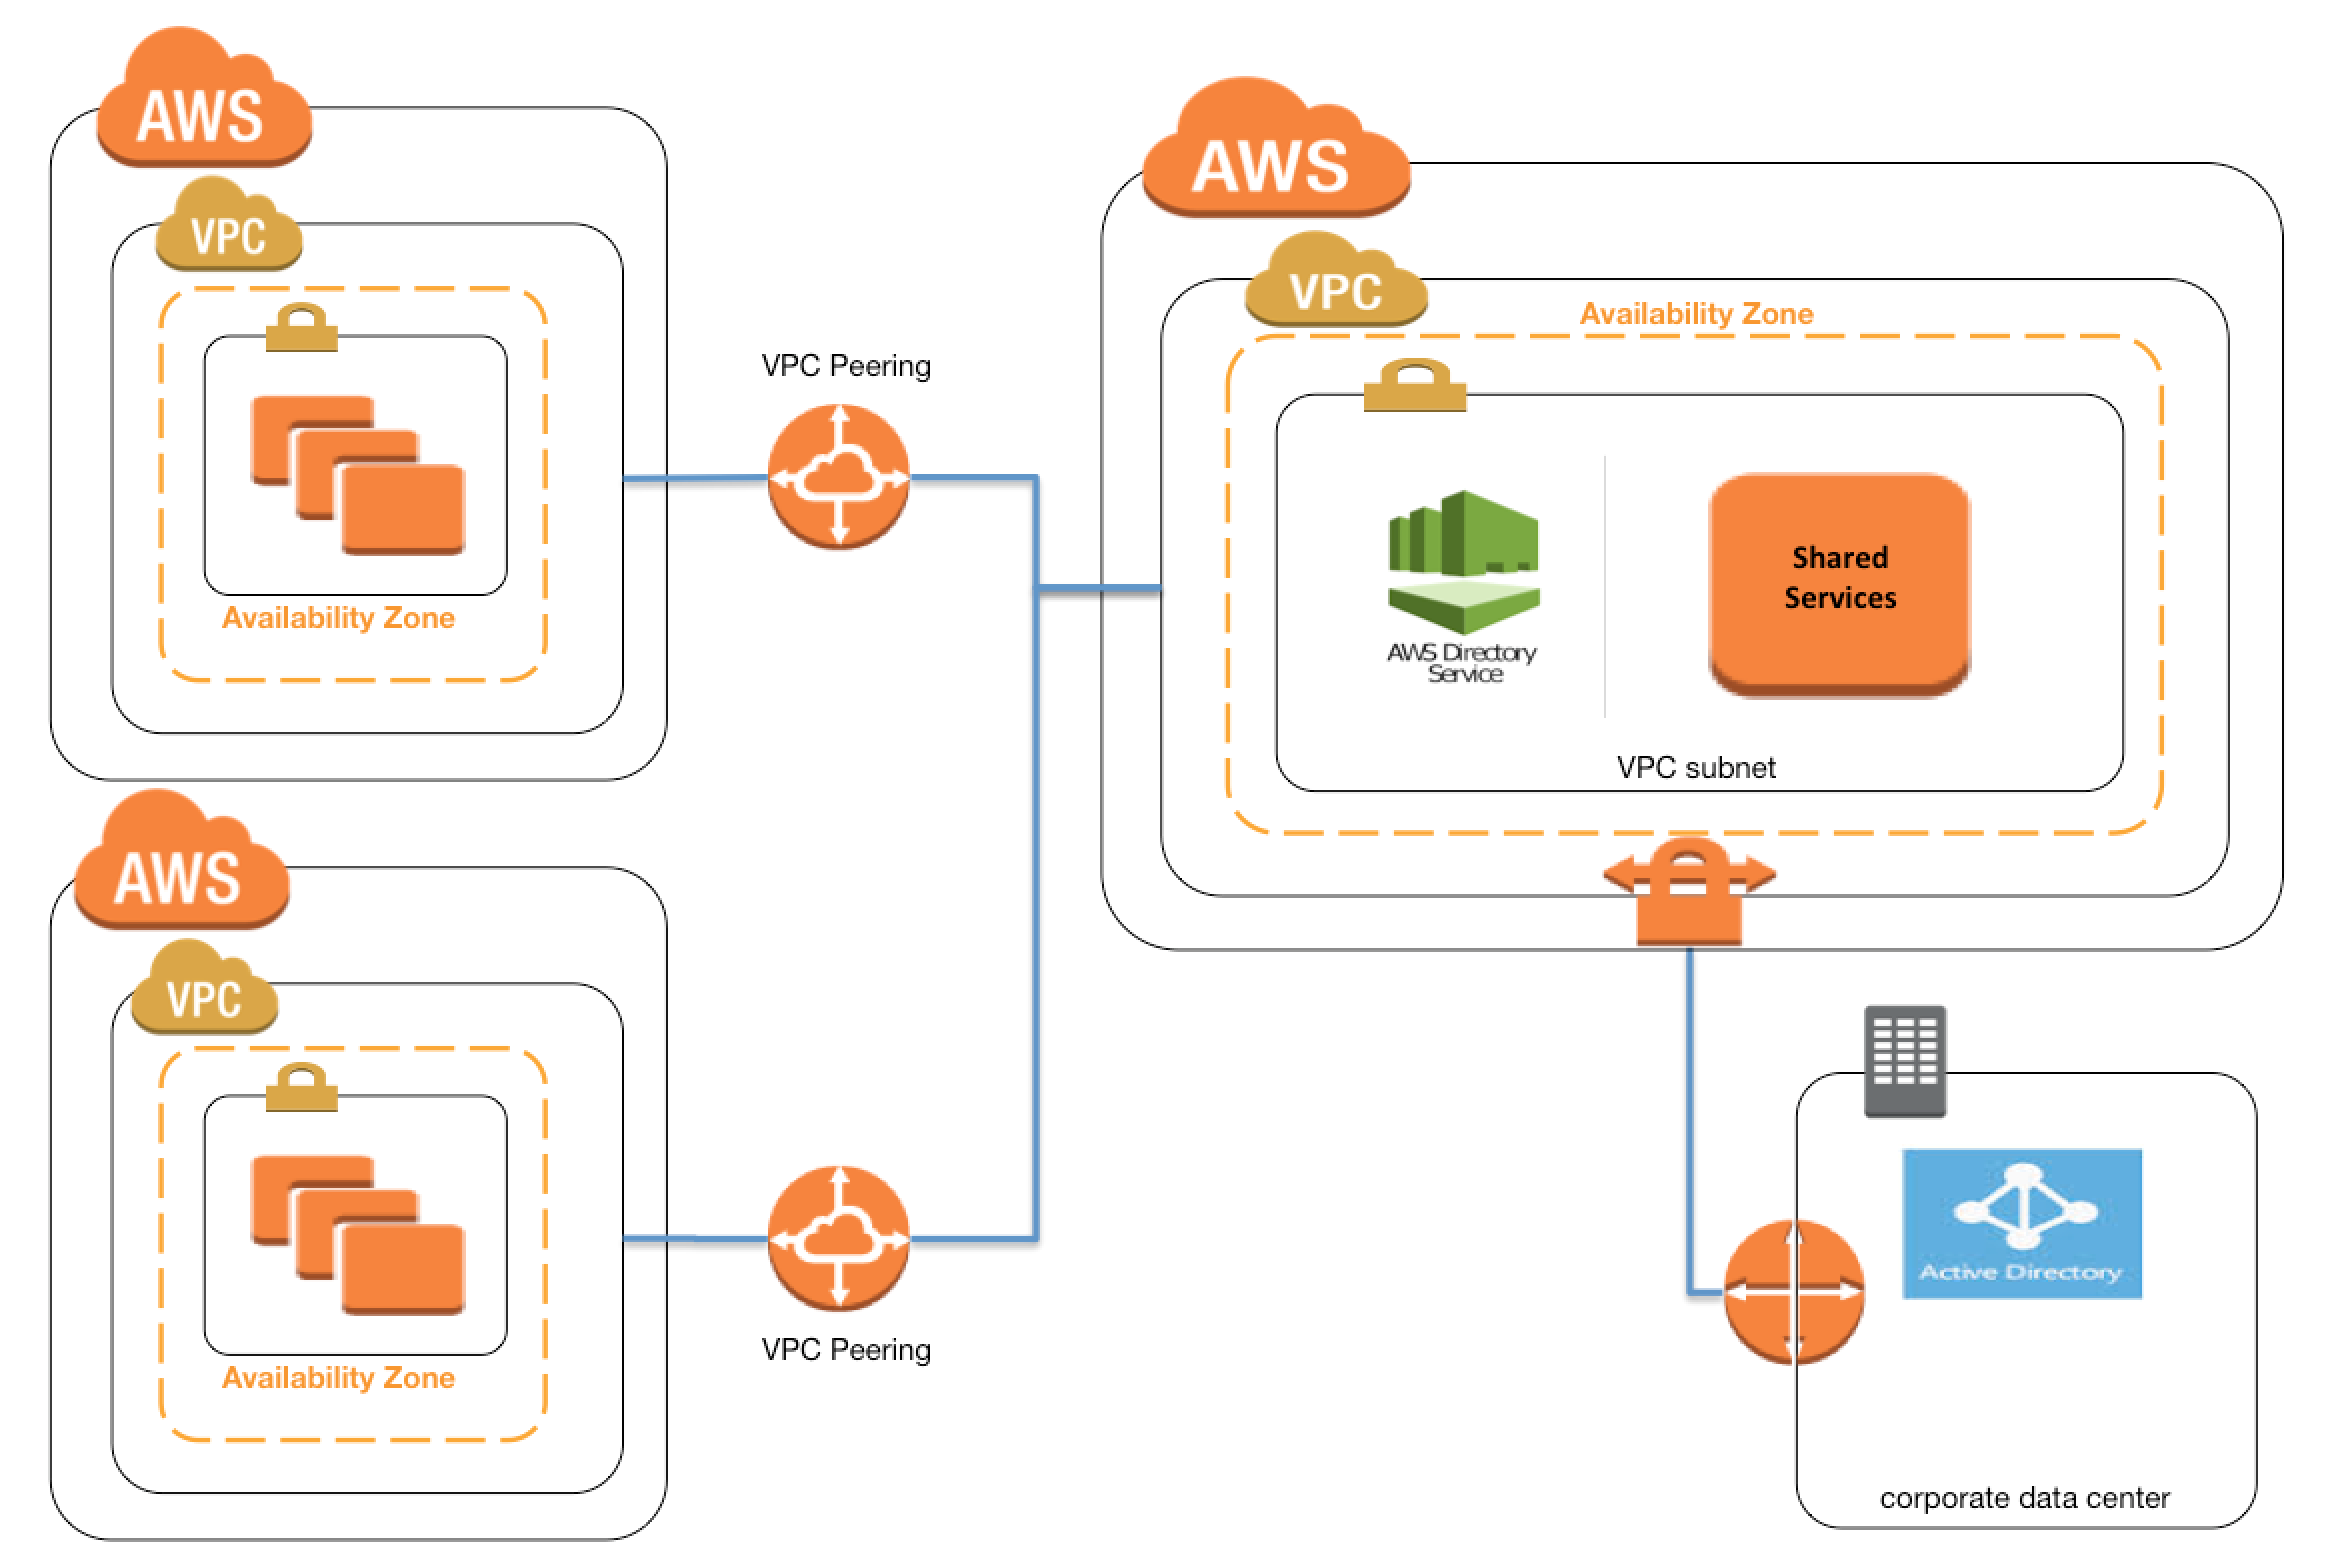 AWS VPC Architecture